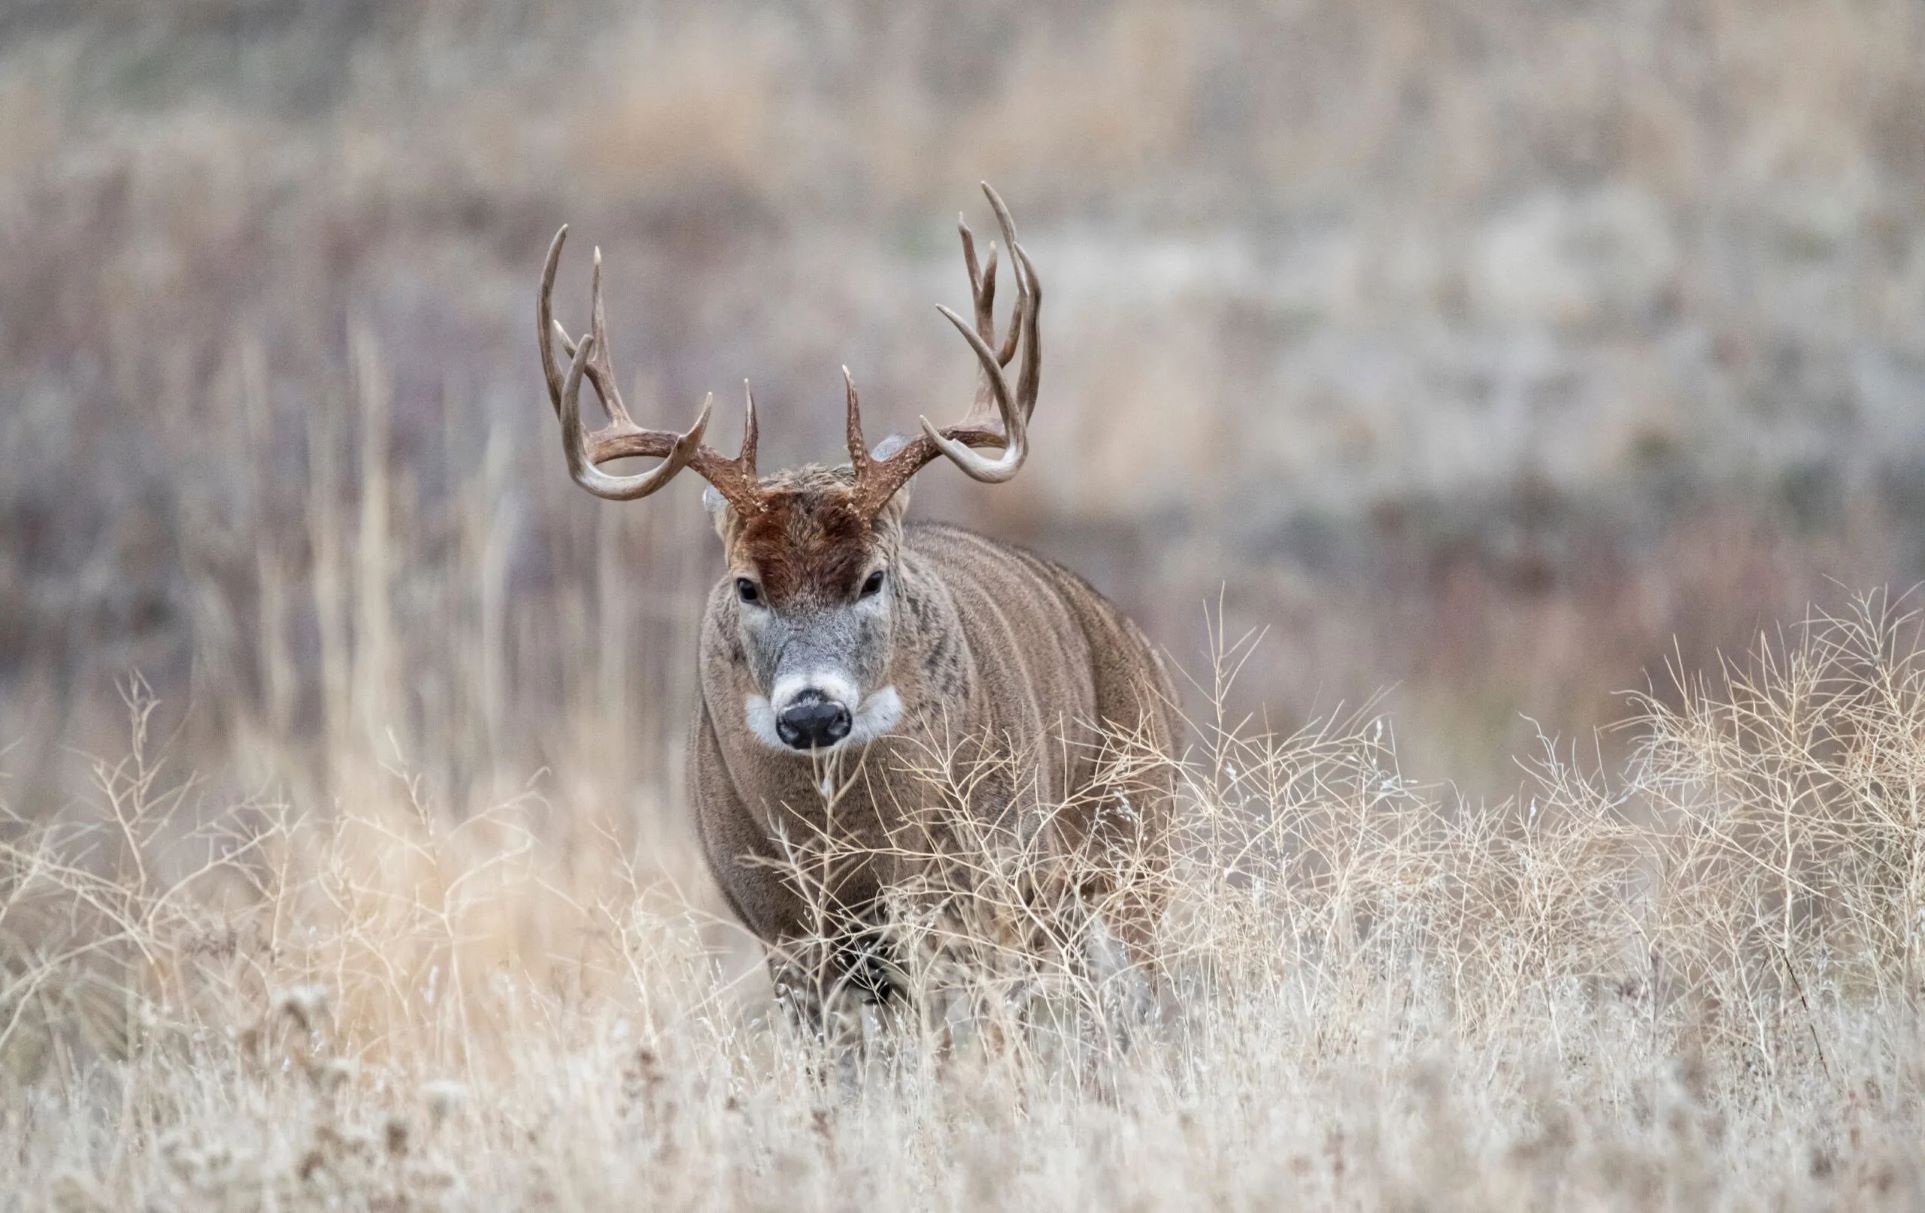 Listen To The Incredible Sound Of A Buck Deer Grunt!